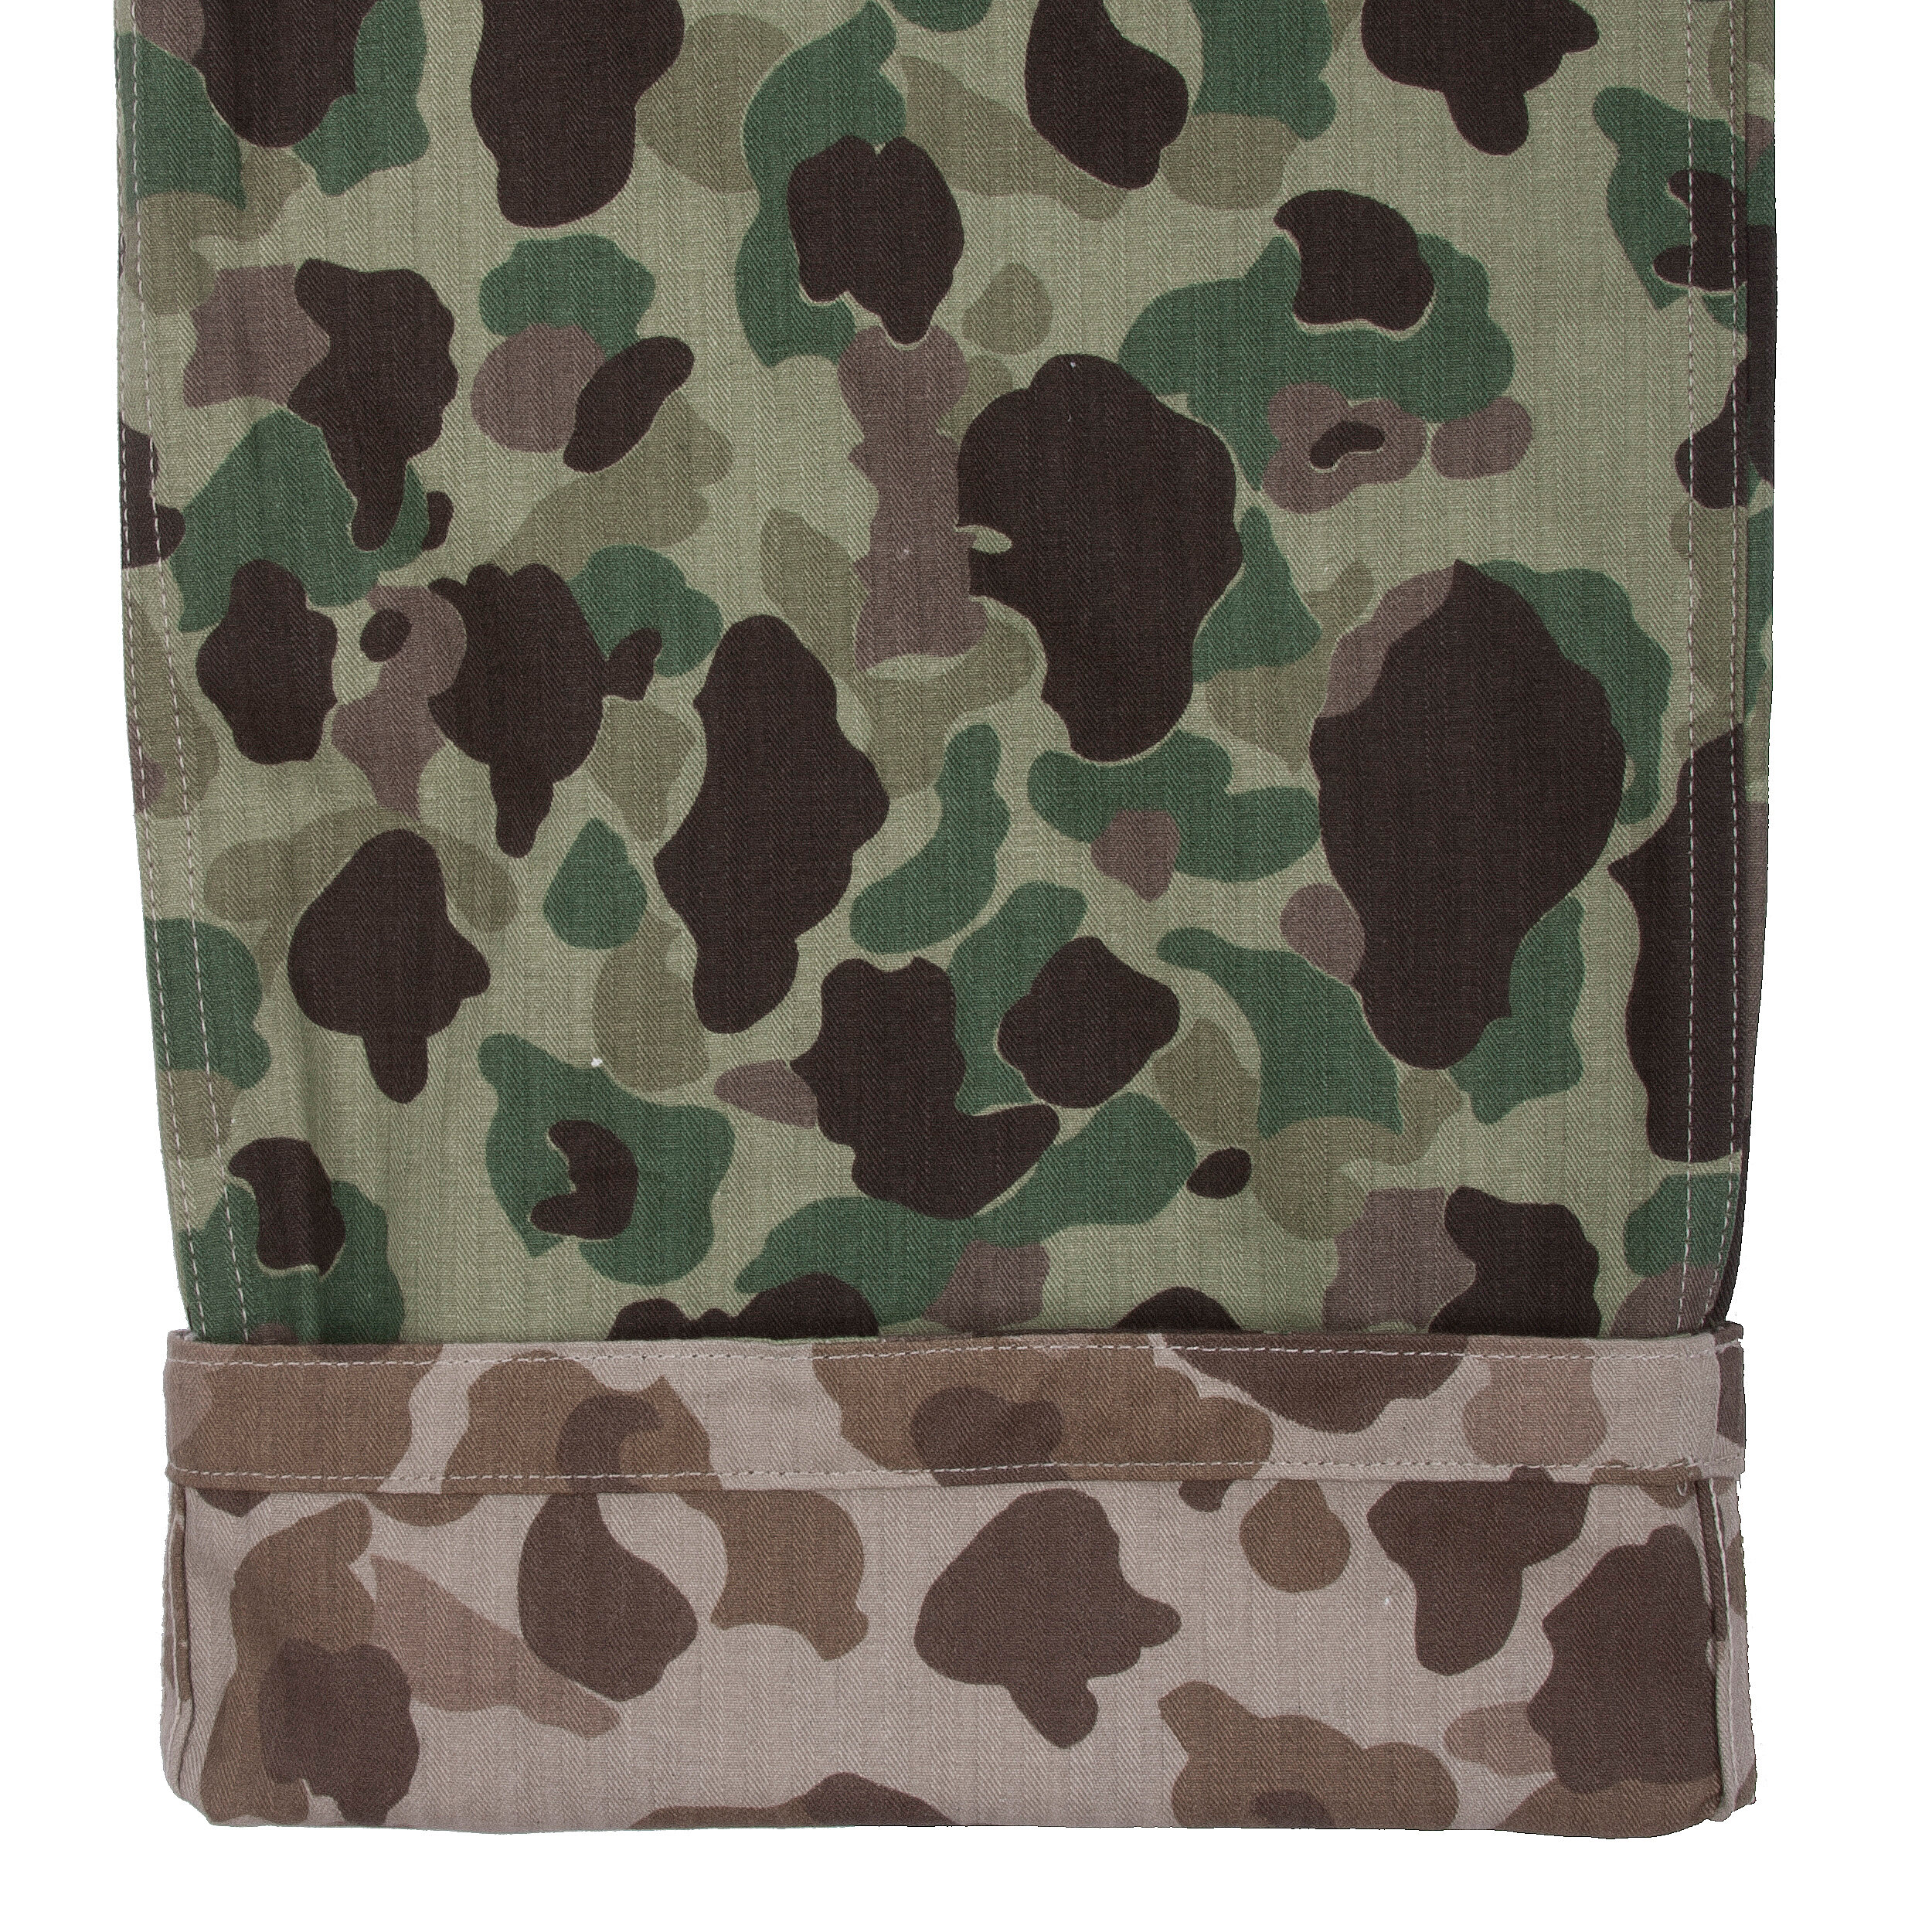 SM Wholesale USA — USMC P-42 Camouflage HBT Trousers Light Green Background